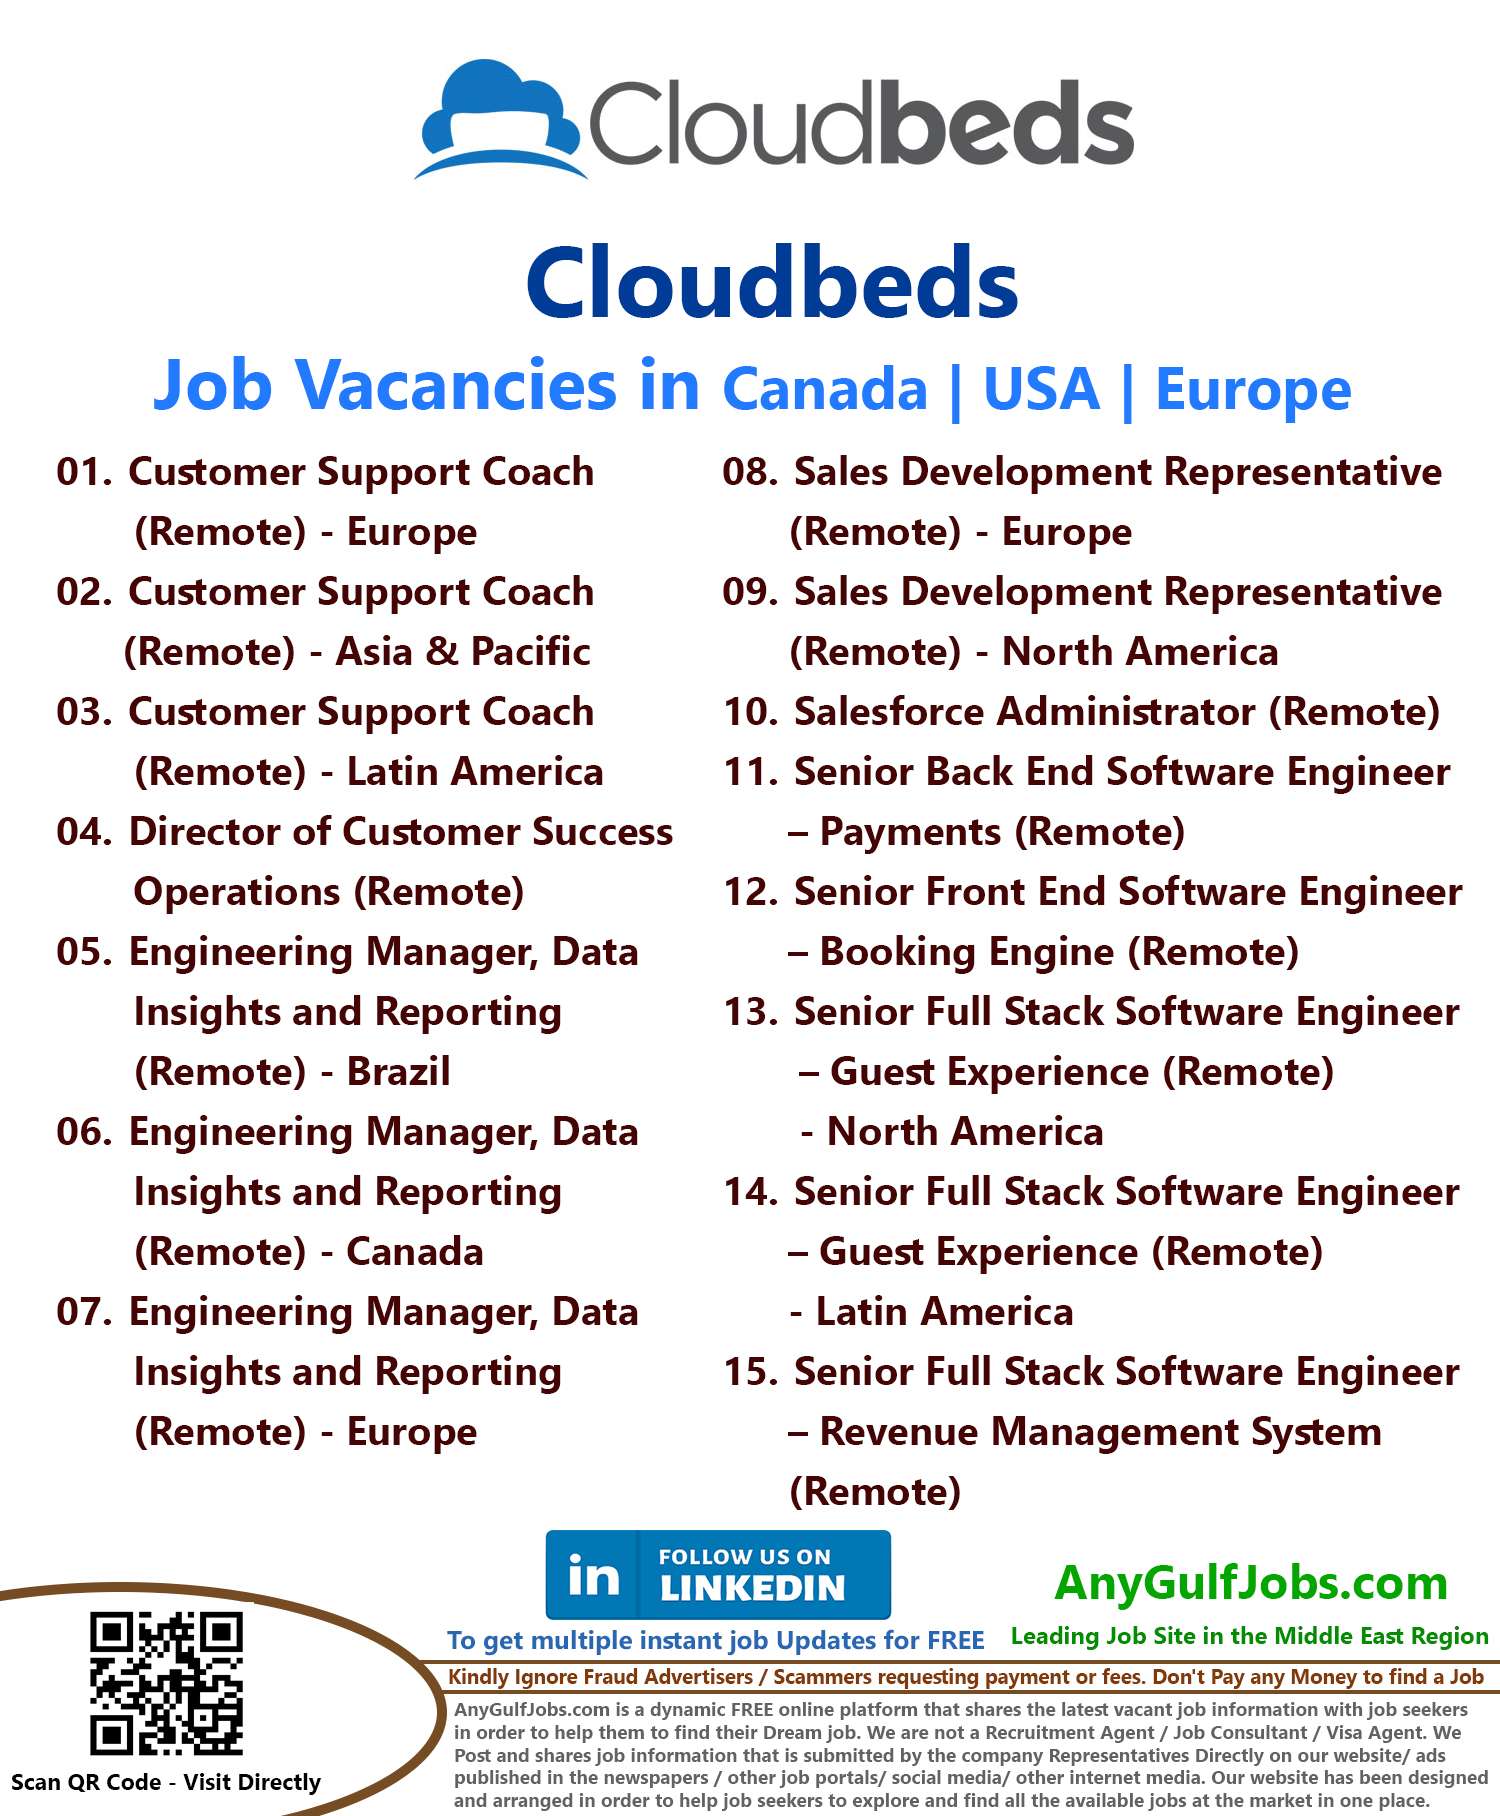 List of Cloudbeds Jobs